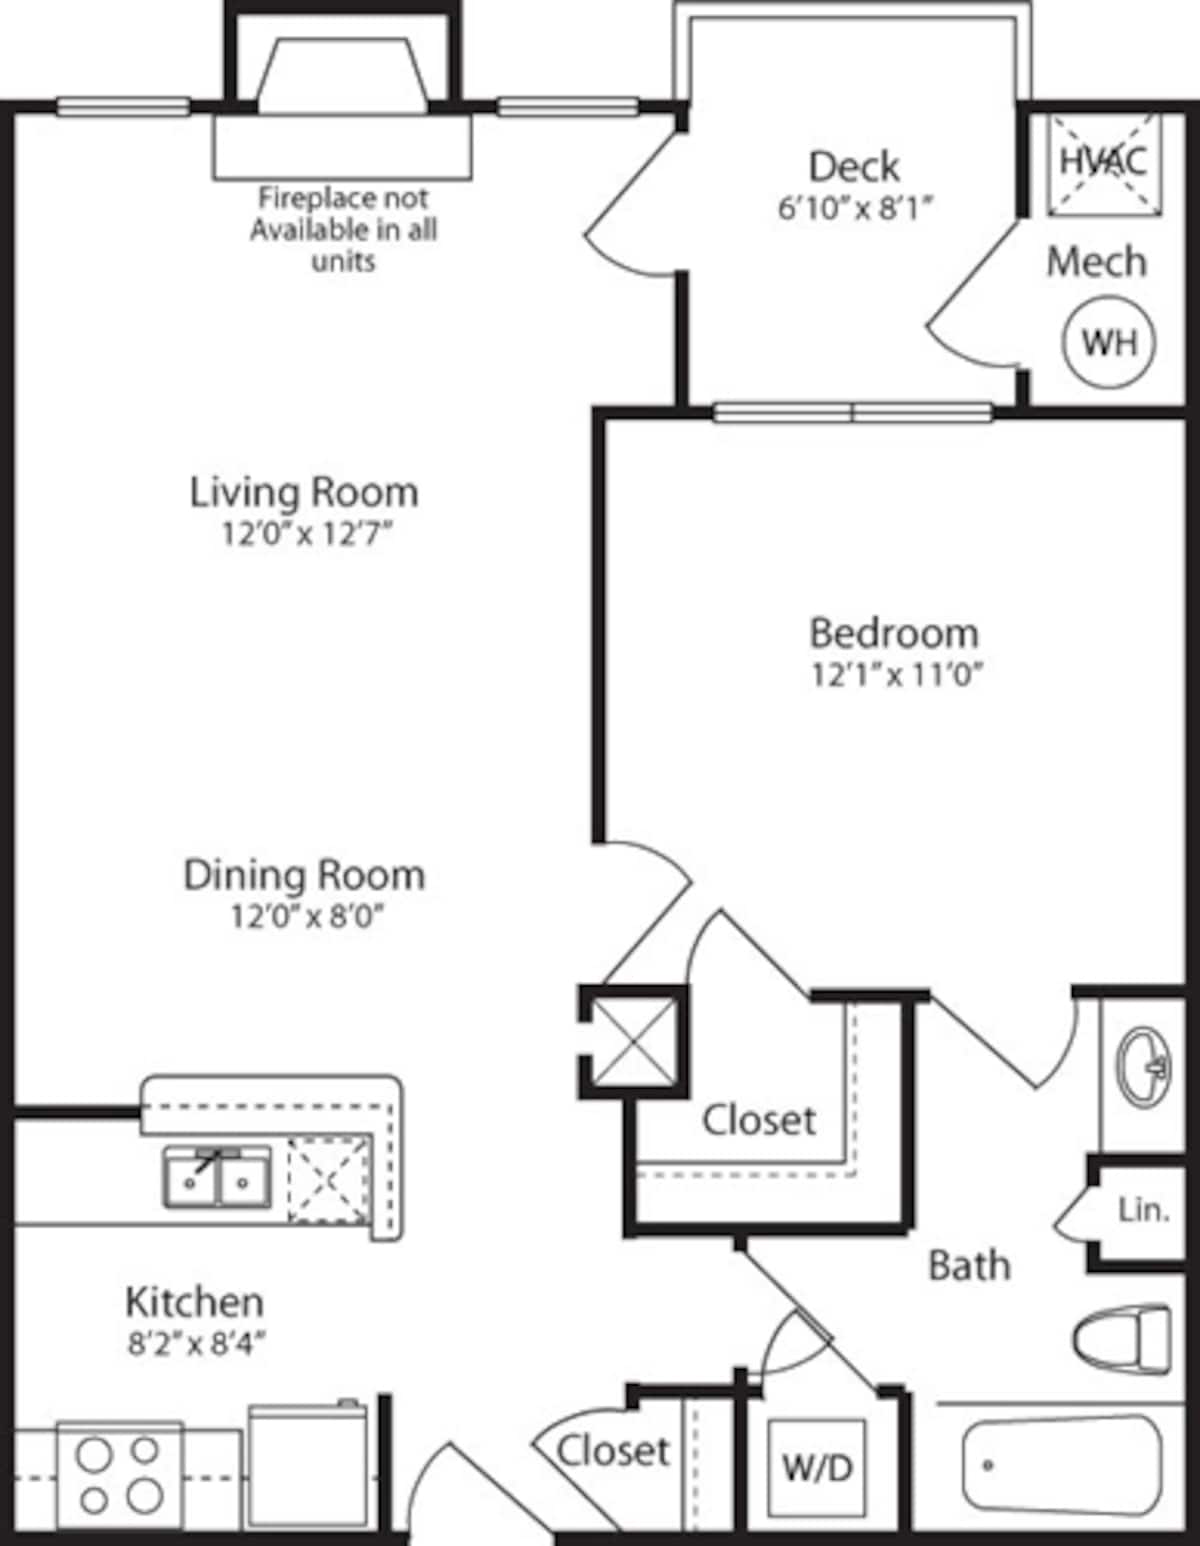 Floorplan diagram for The Aster, showing 1 bedroom